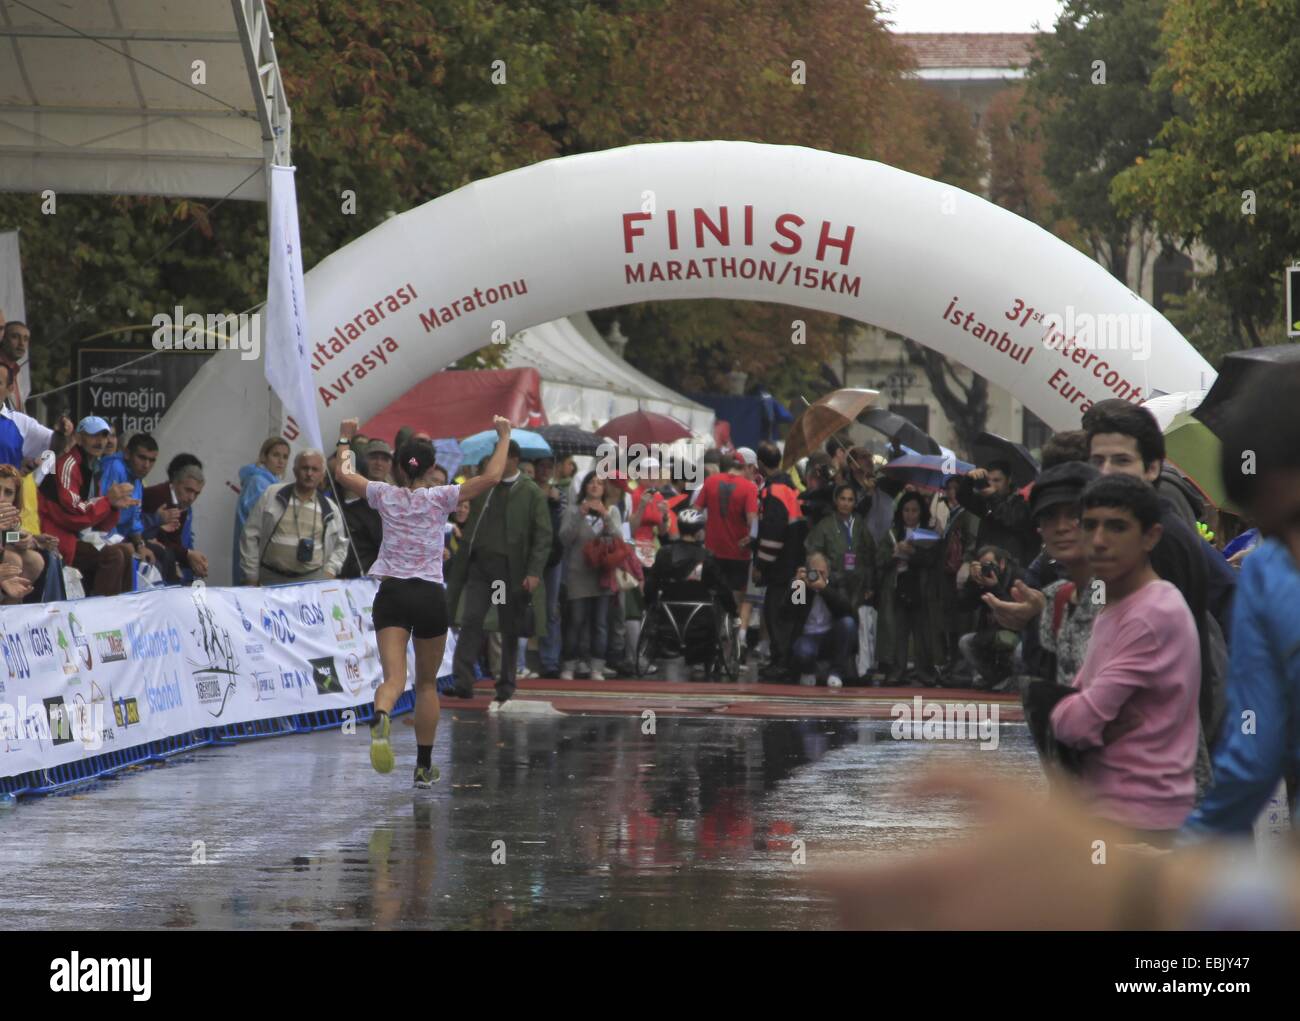 Young runner cheering tout en terminant un marathon, de la Turquie, Istanbul Banque D'Images